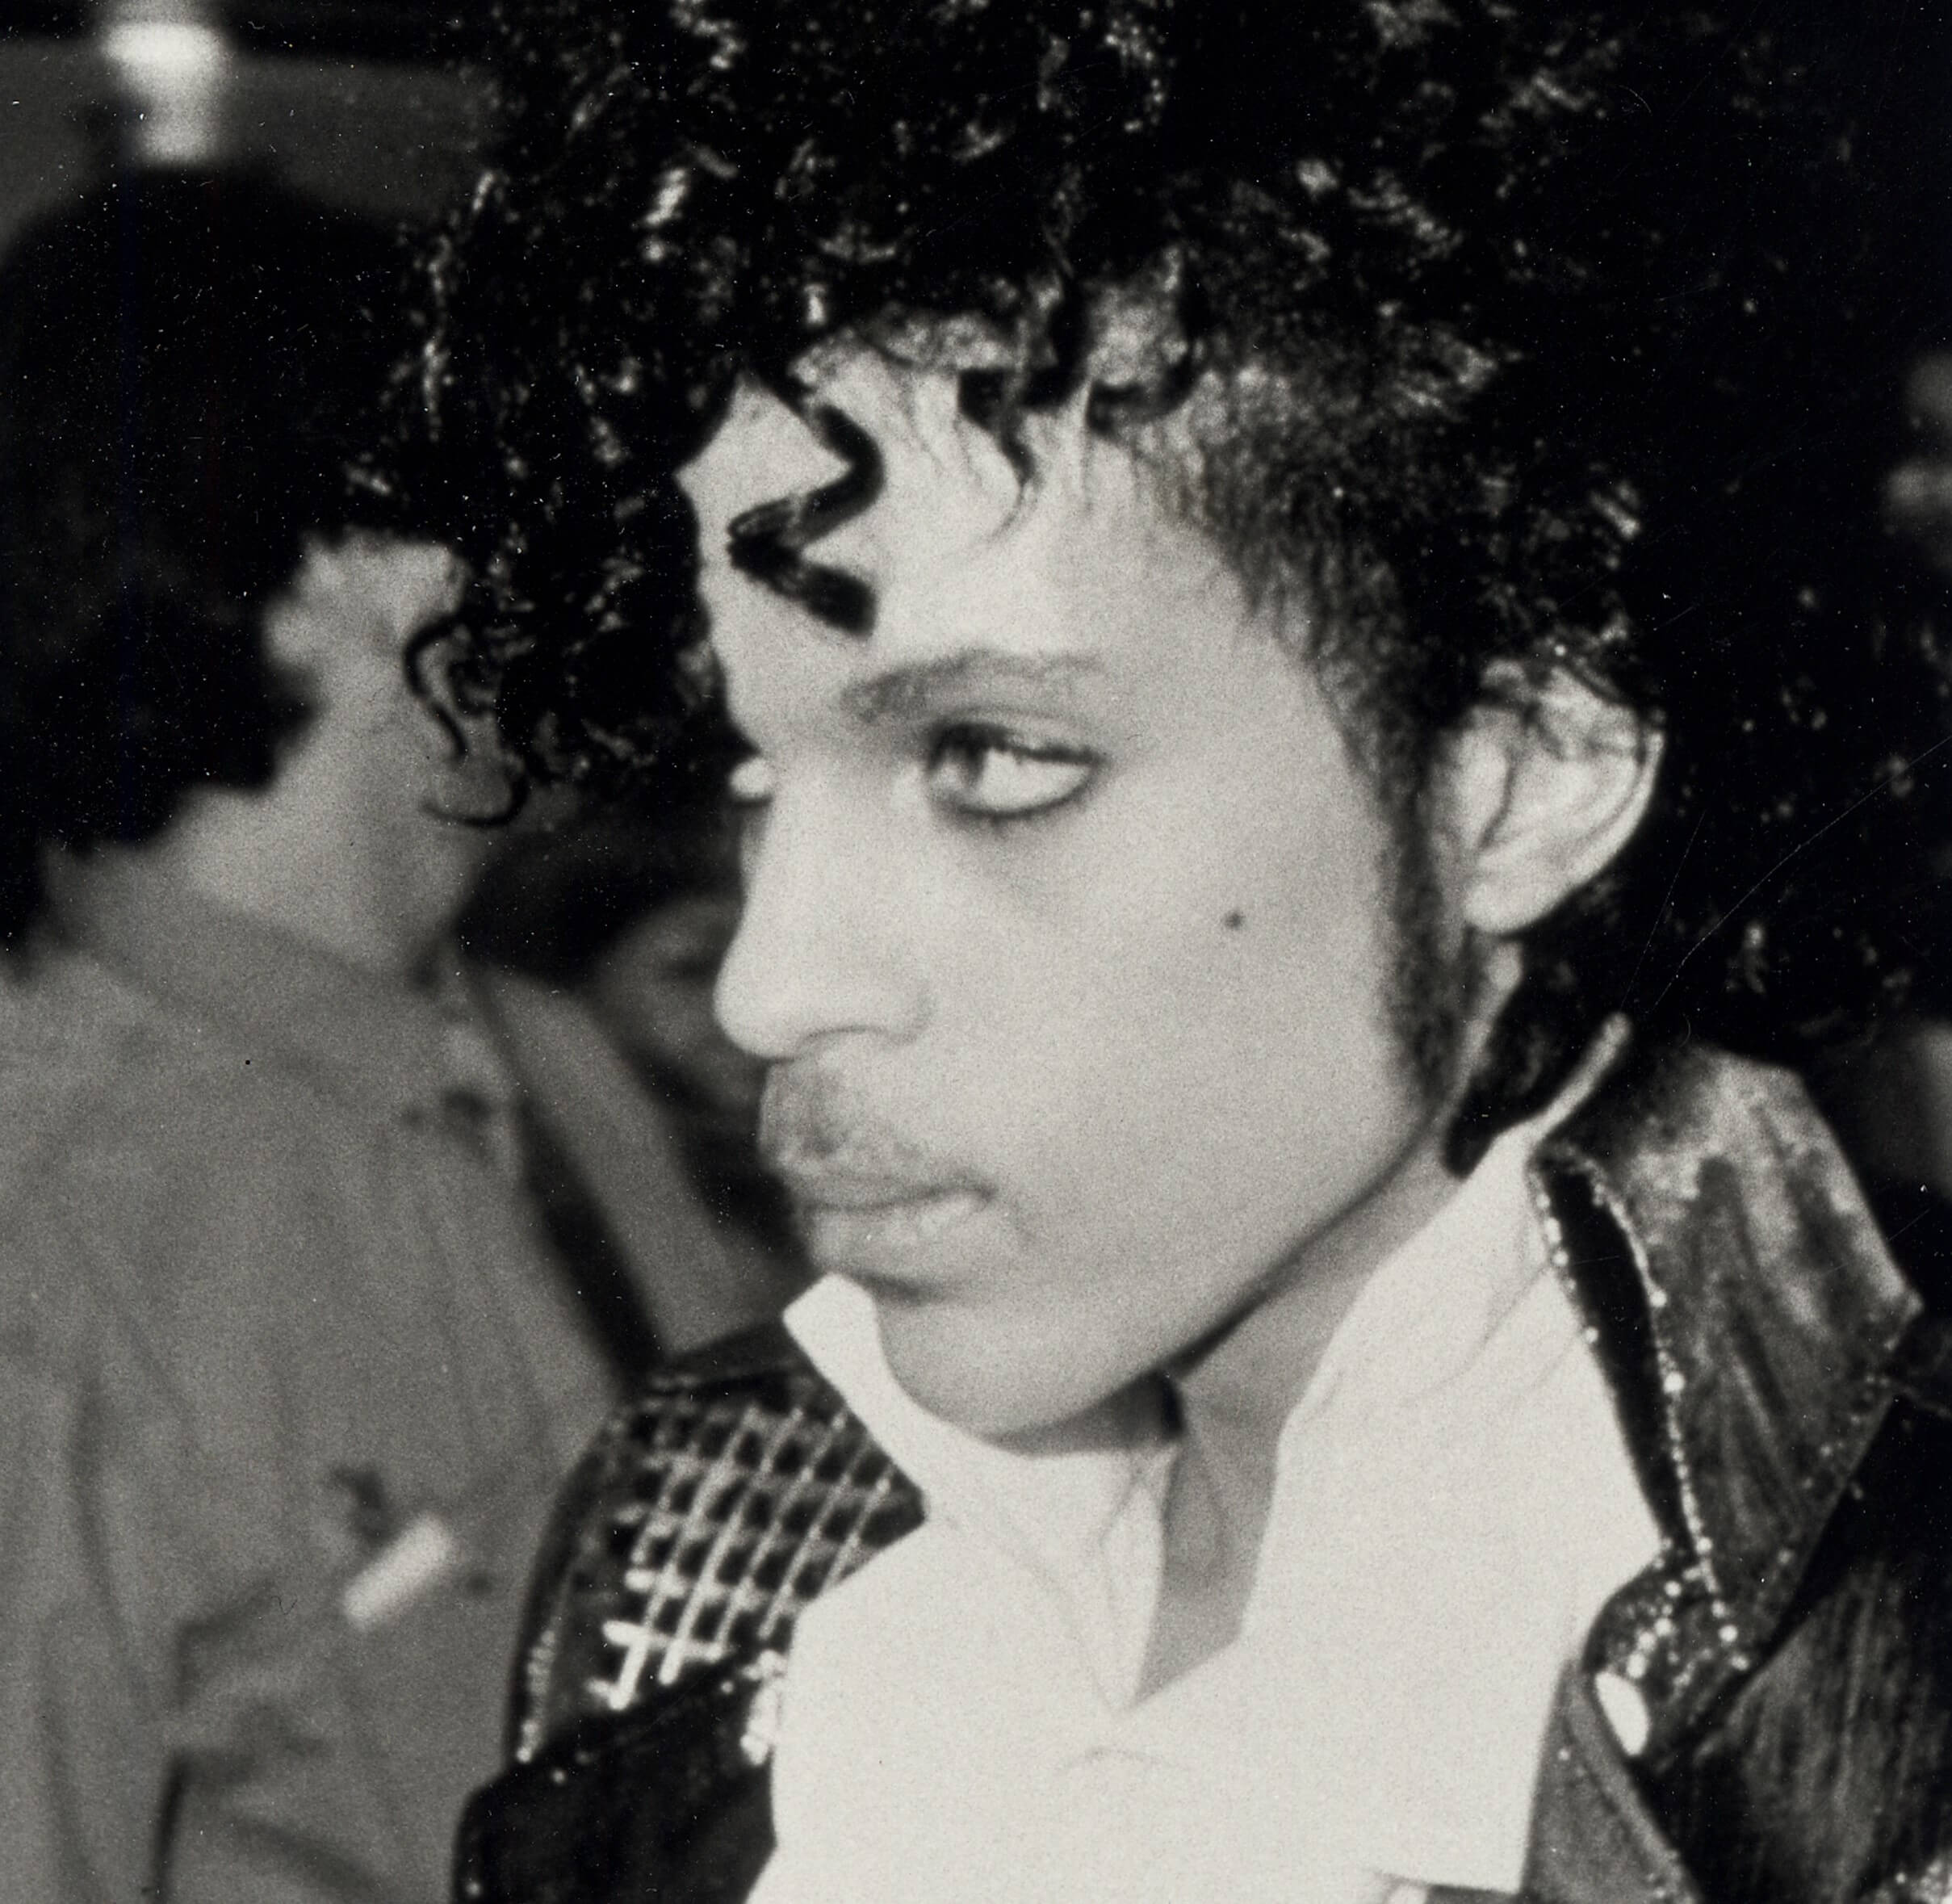 Prince with long hair during the "Purple Rain" era